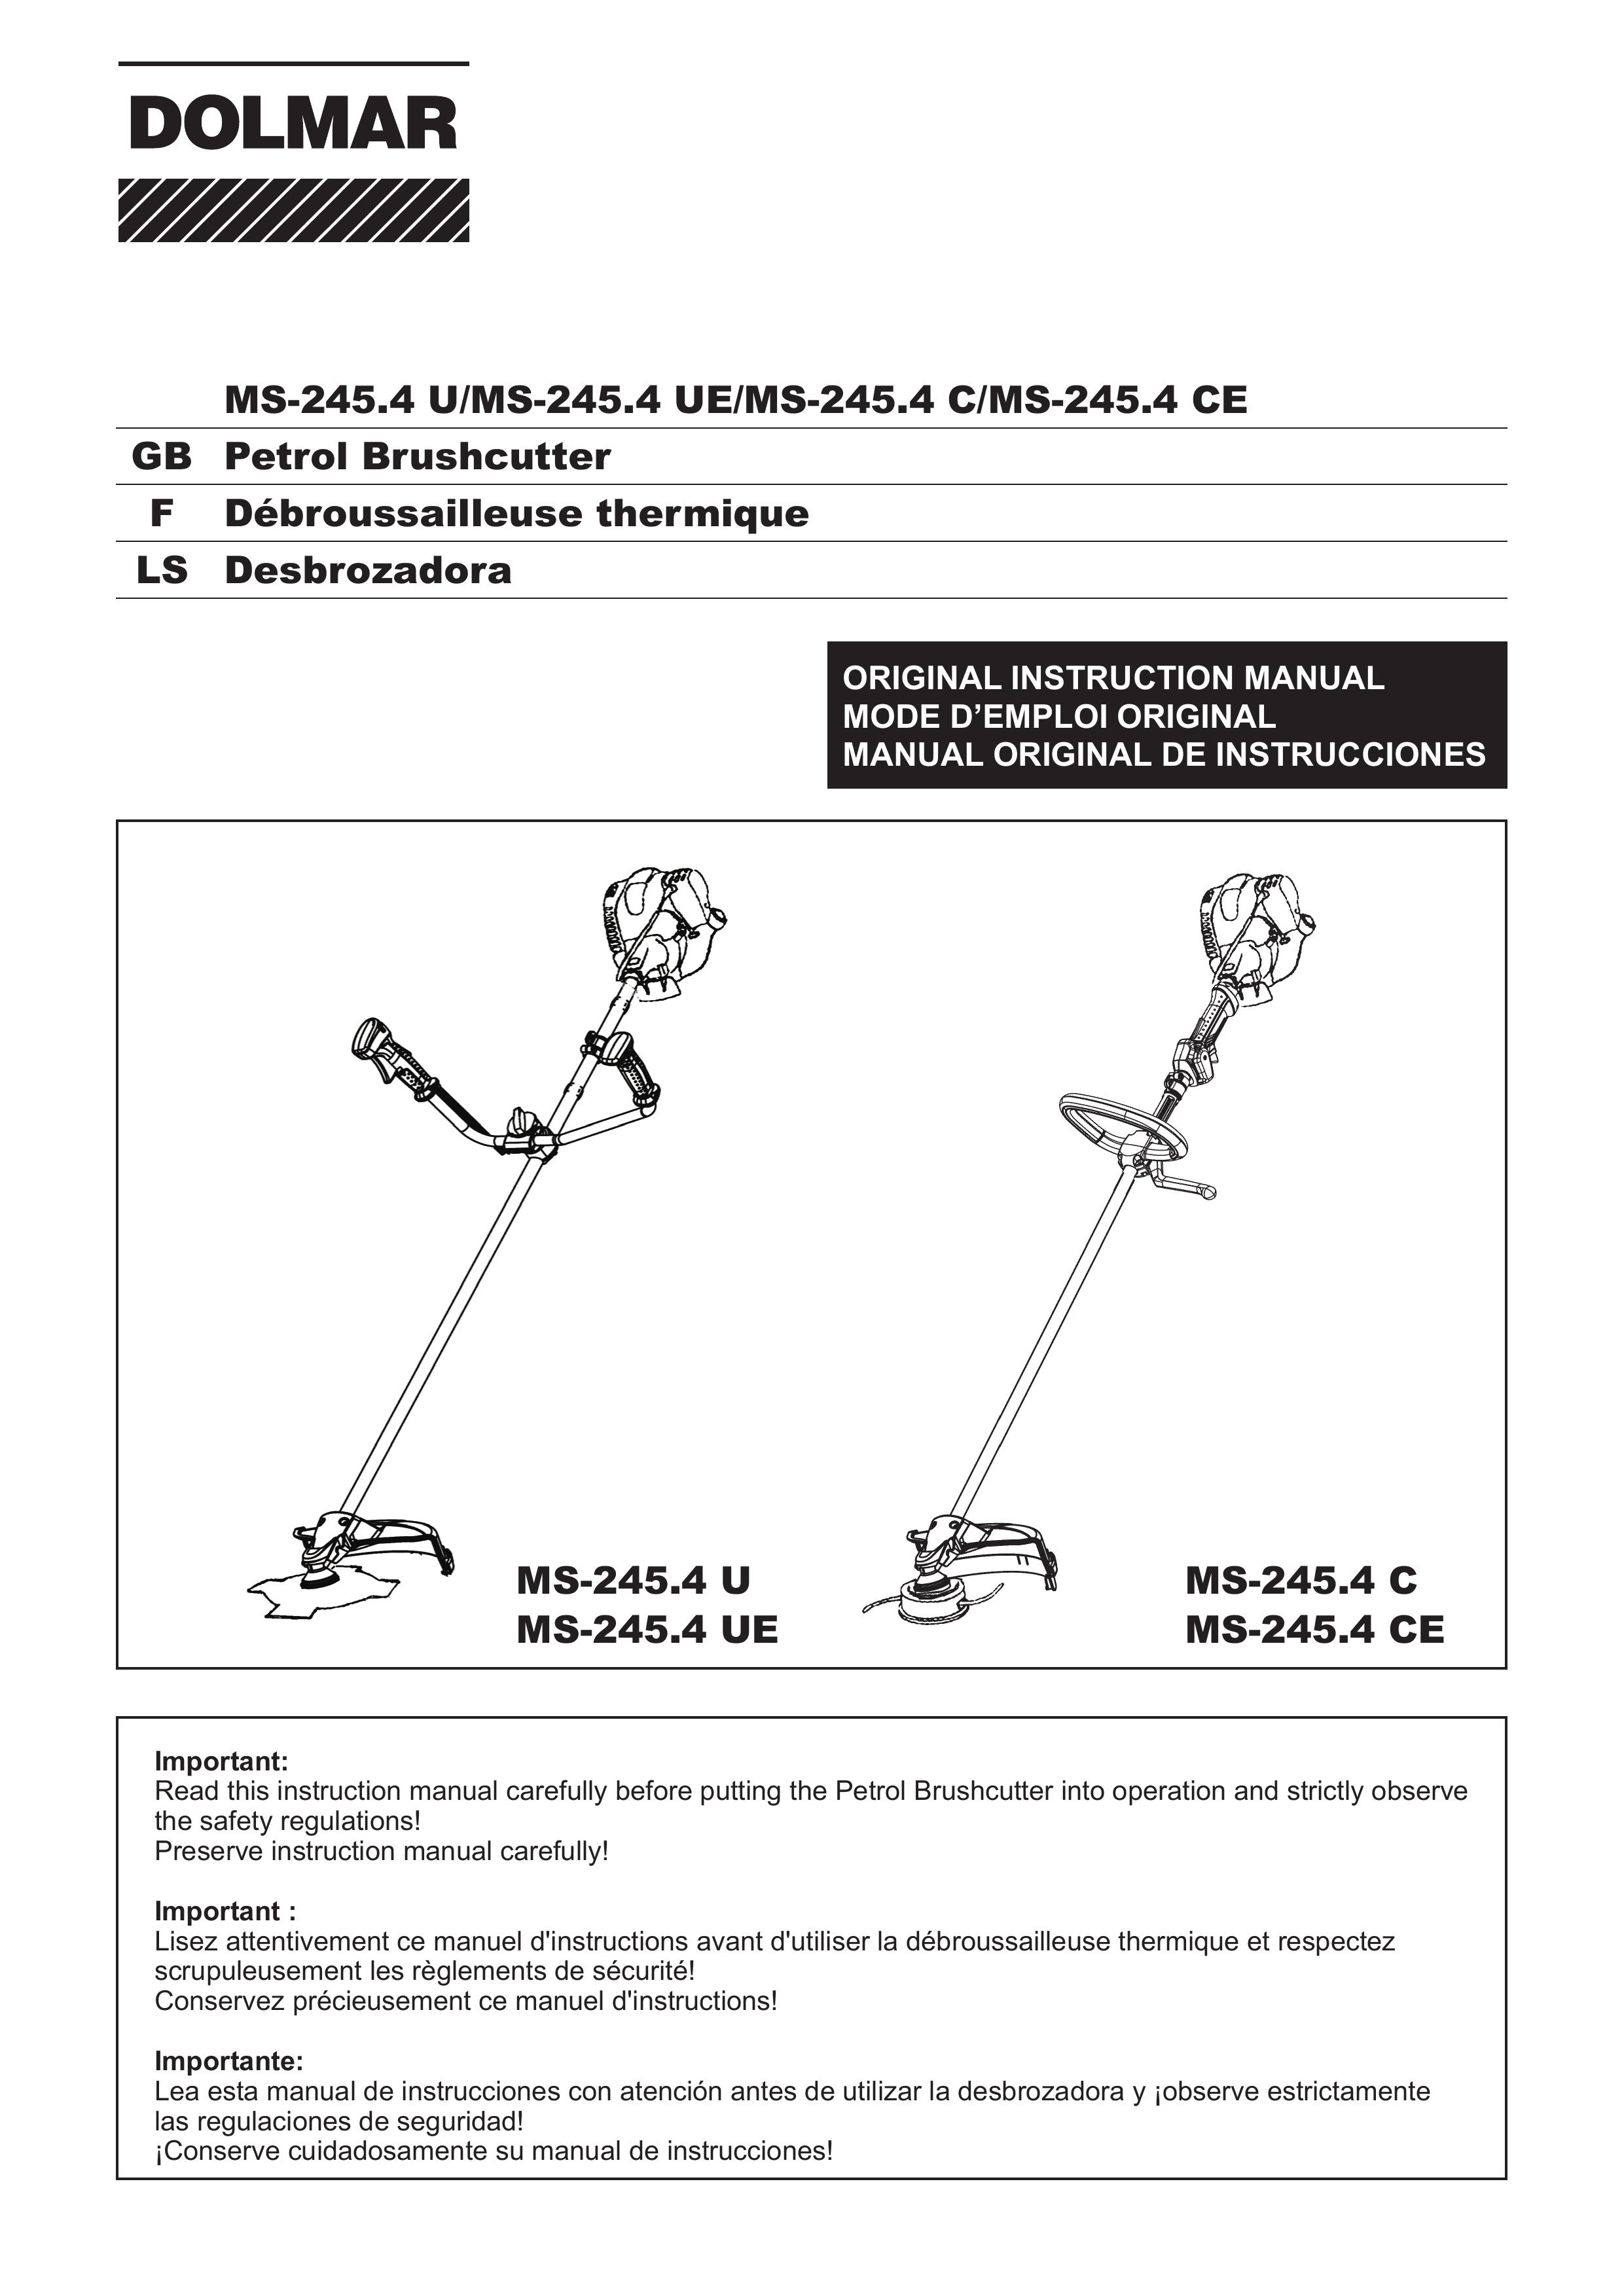 Dolmar MS-245.4 CE Brush Cutter User Manual